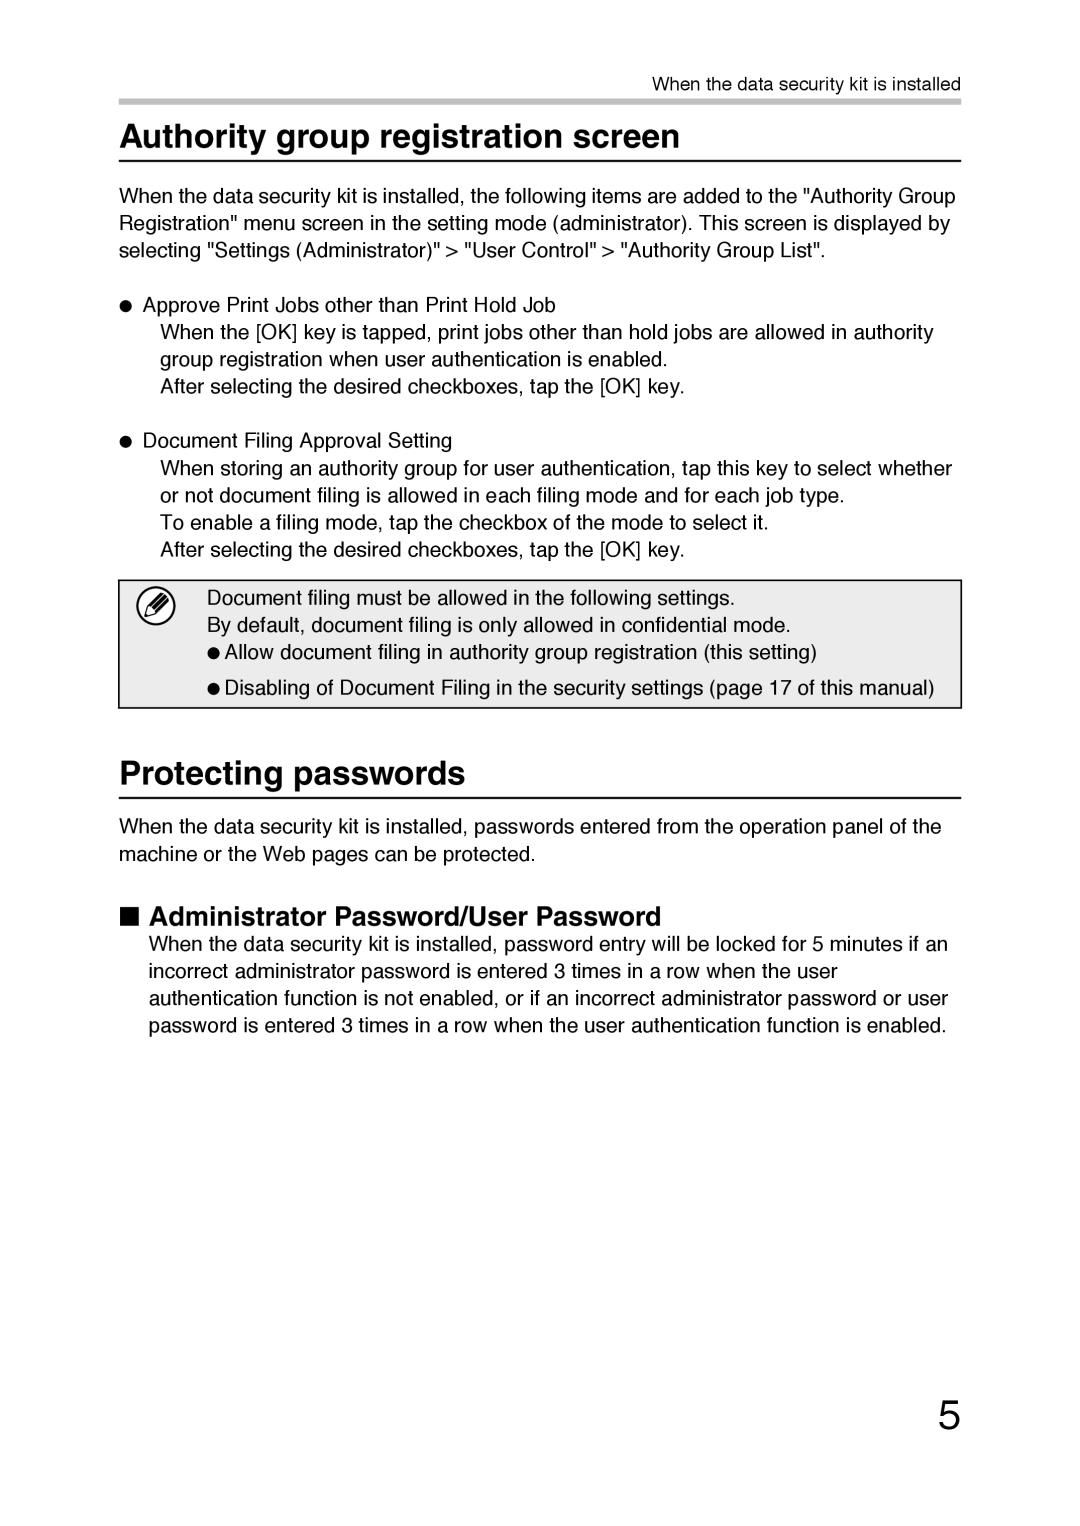 Sharp MX-FR36U manual Authority group registration screen, Protecting passwords, Administrator Password/User Password 